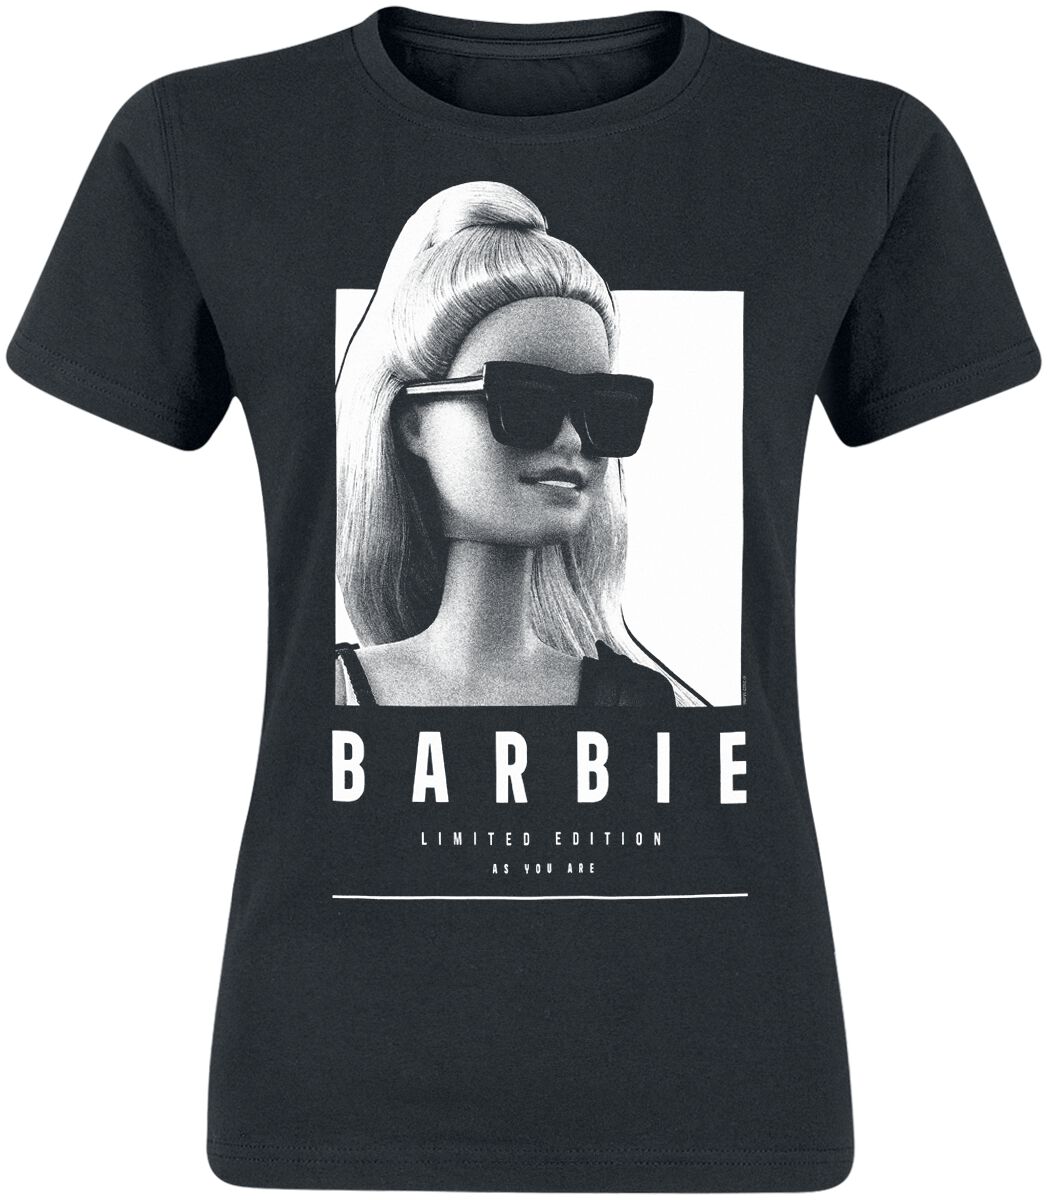 Barbie Limited Edition T-Shirt black